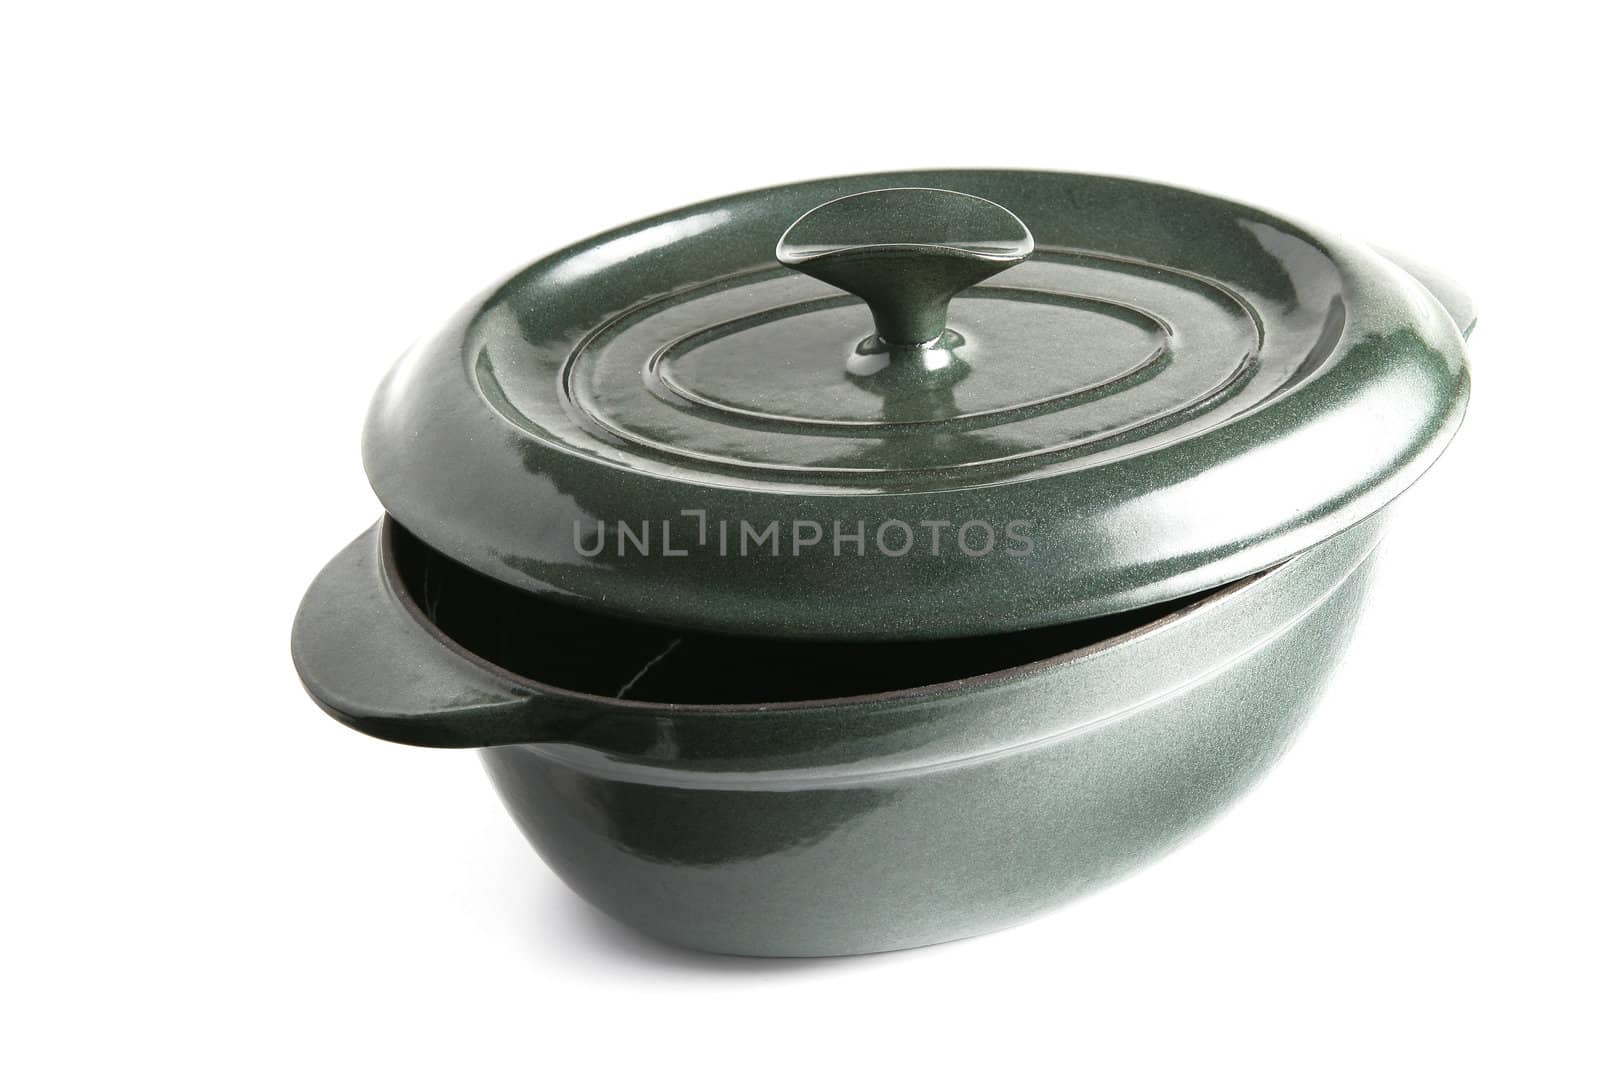 Casserole dish and matching lid